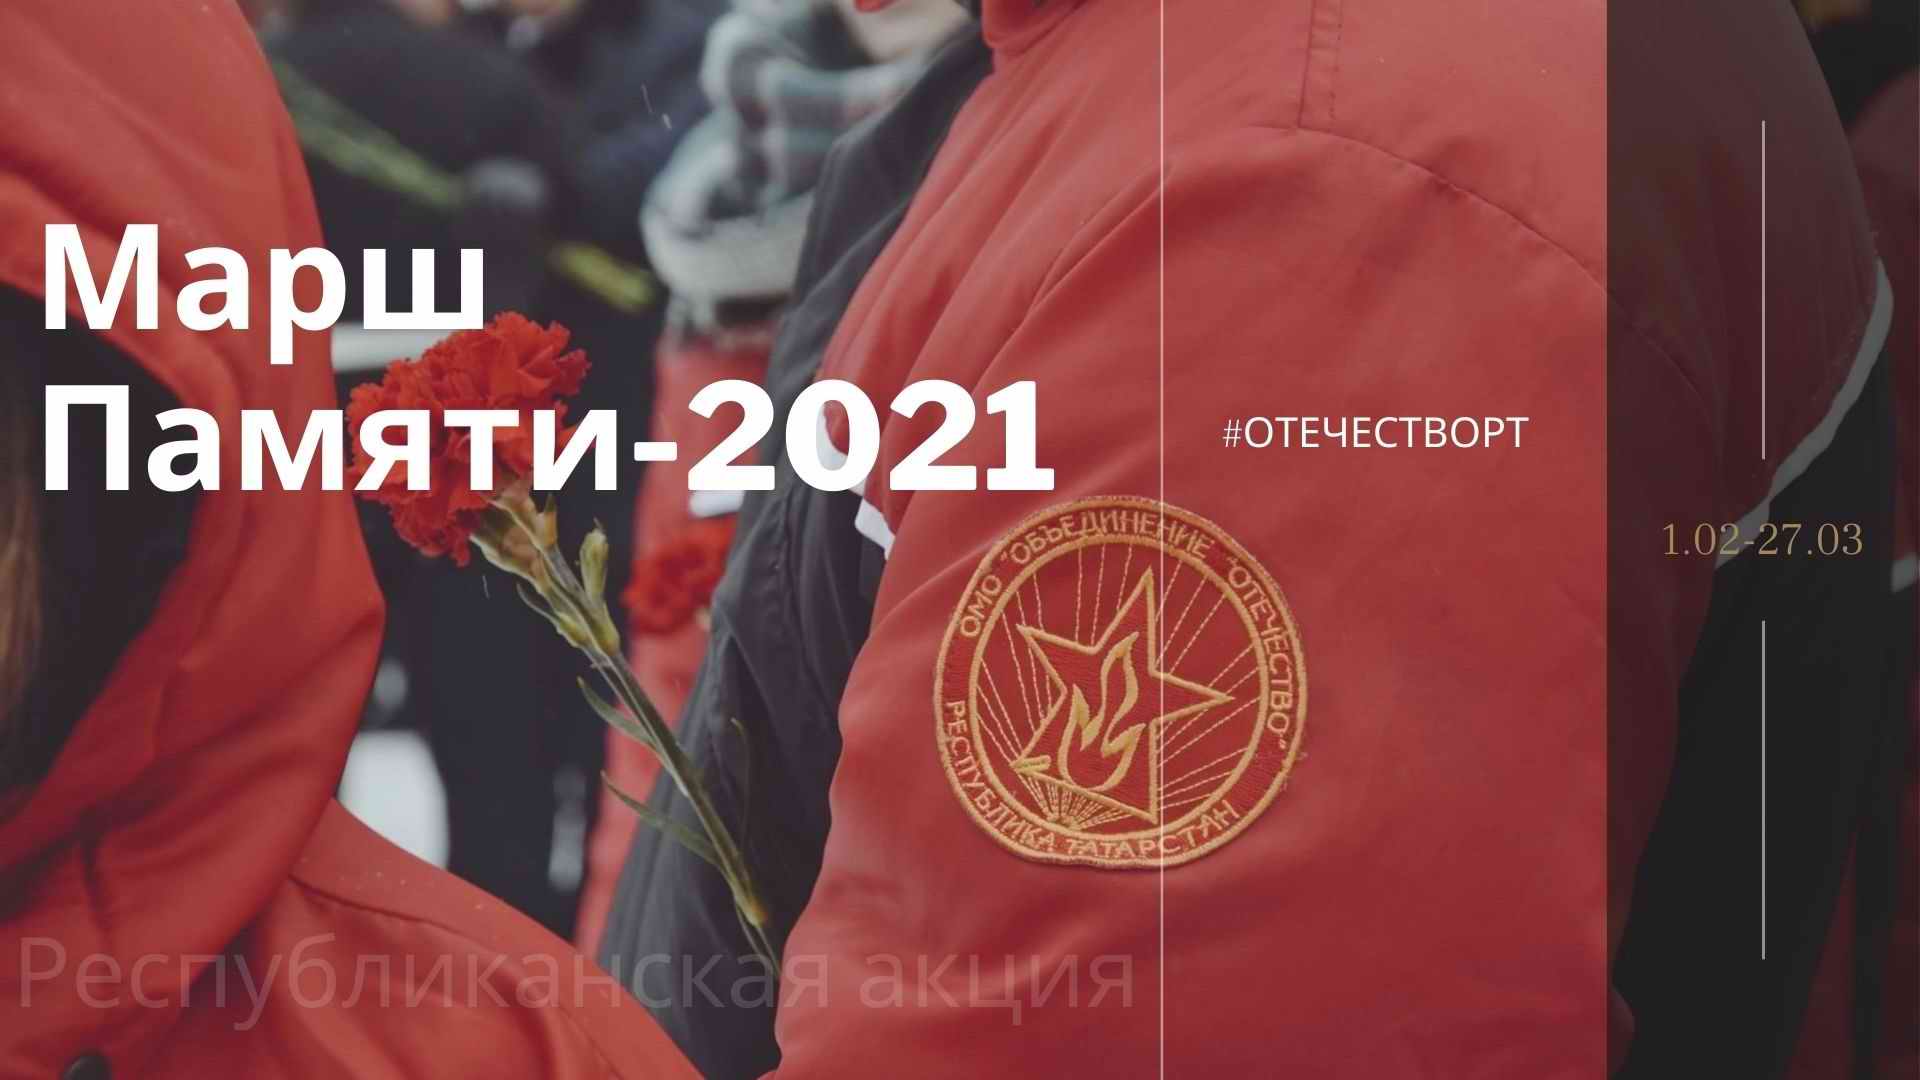 Марш Памяти-2021. Республика Татарстан. 2021 г.